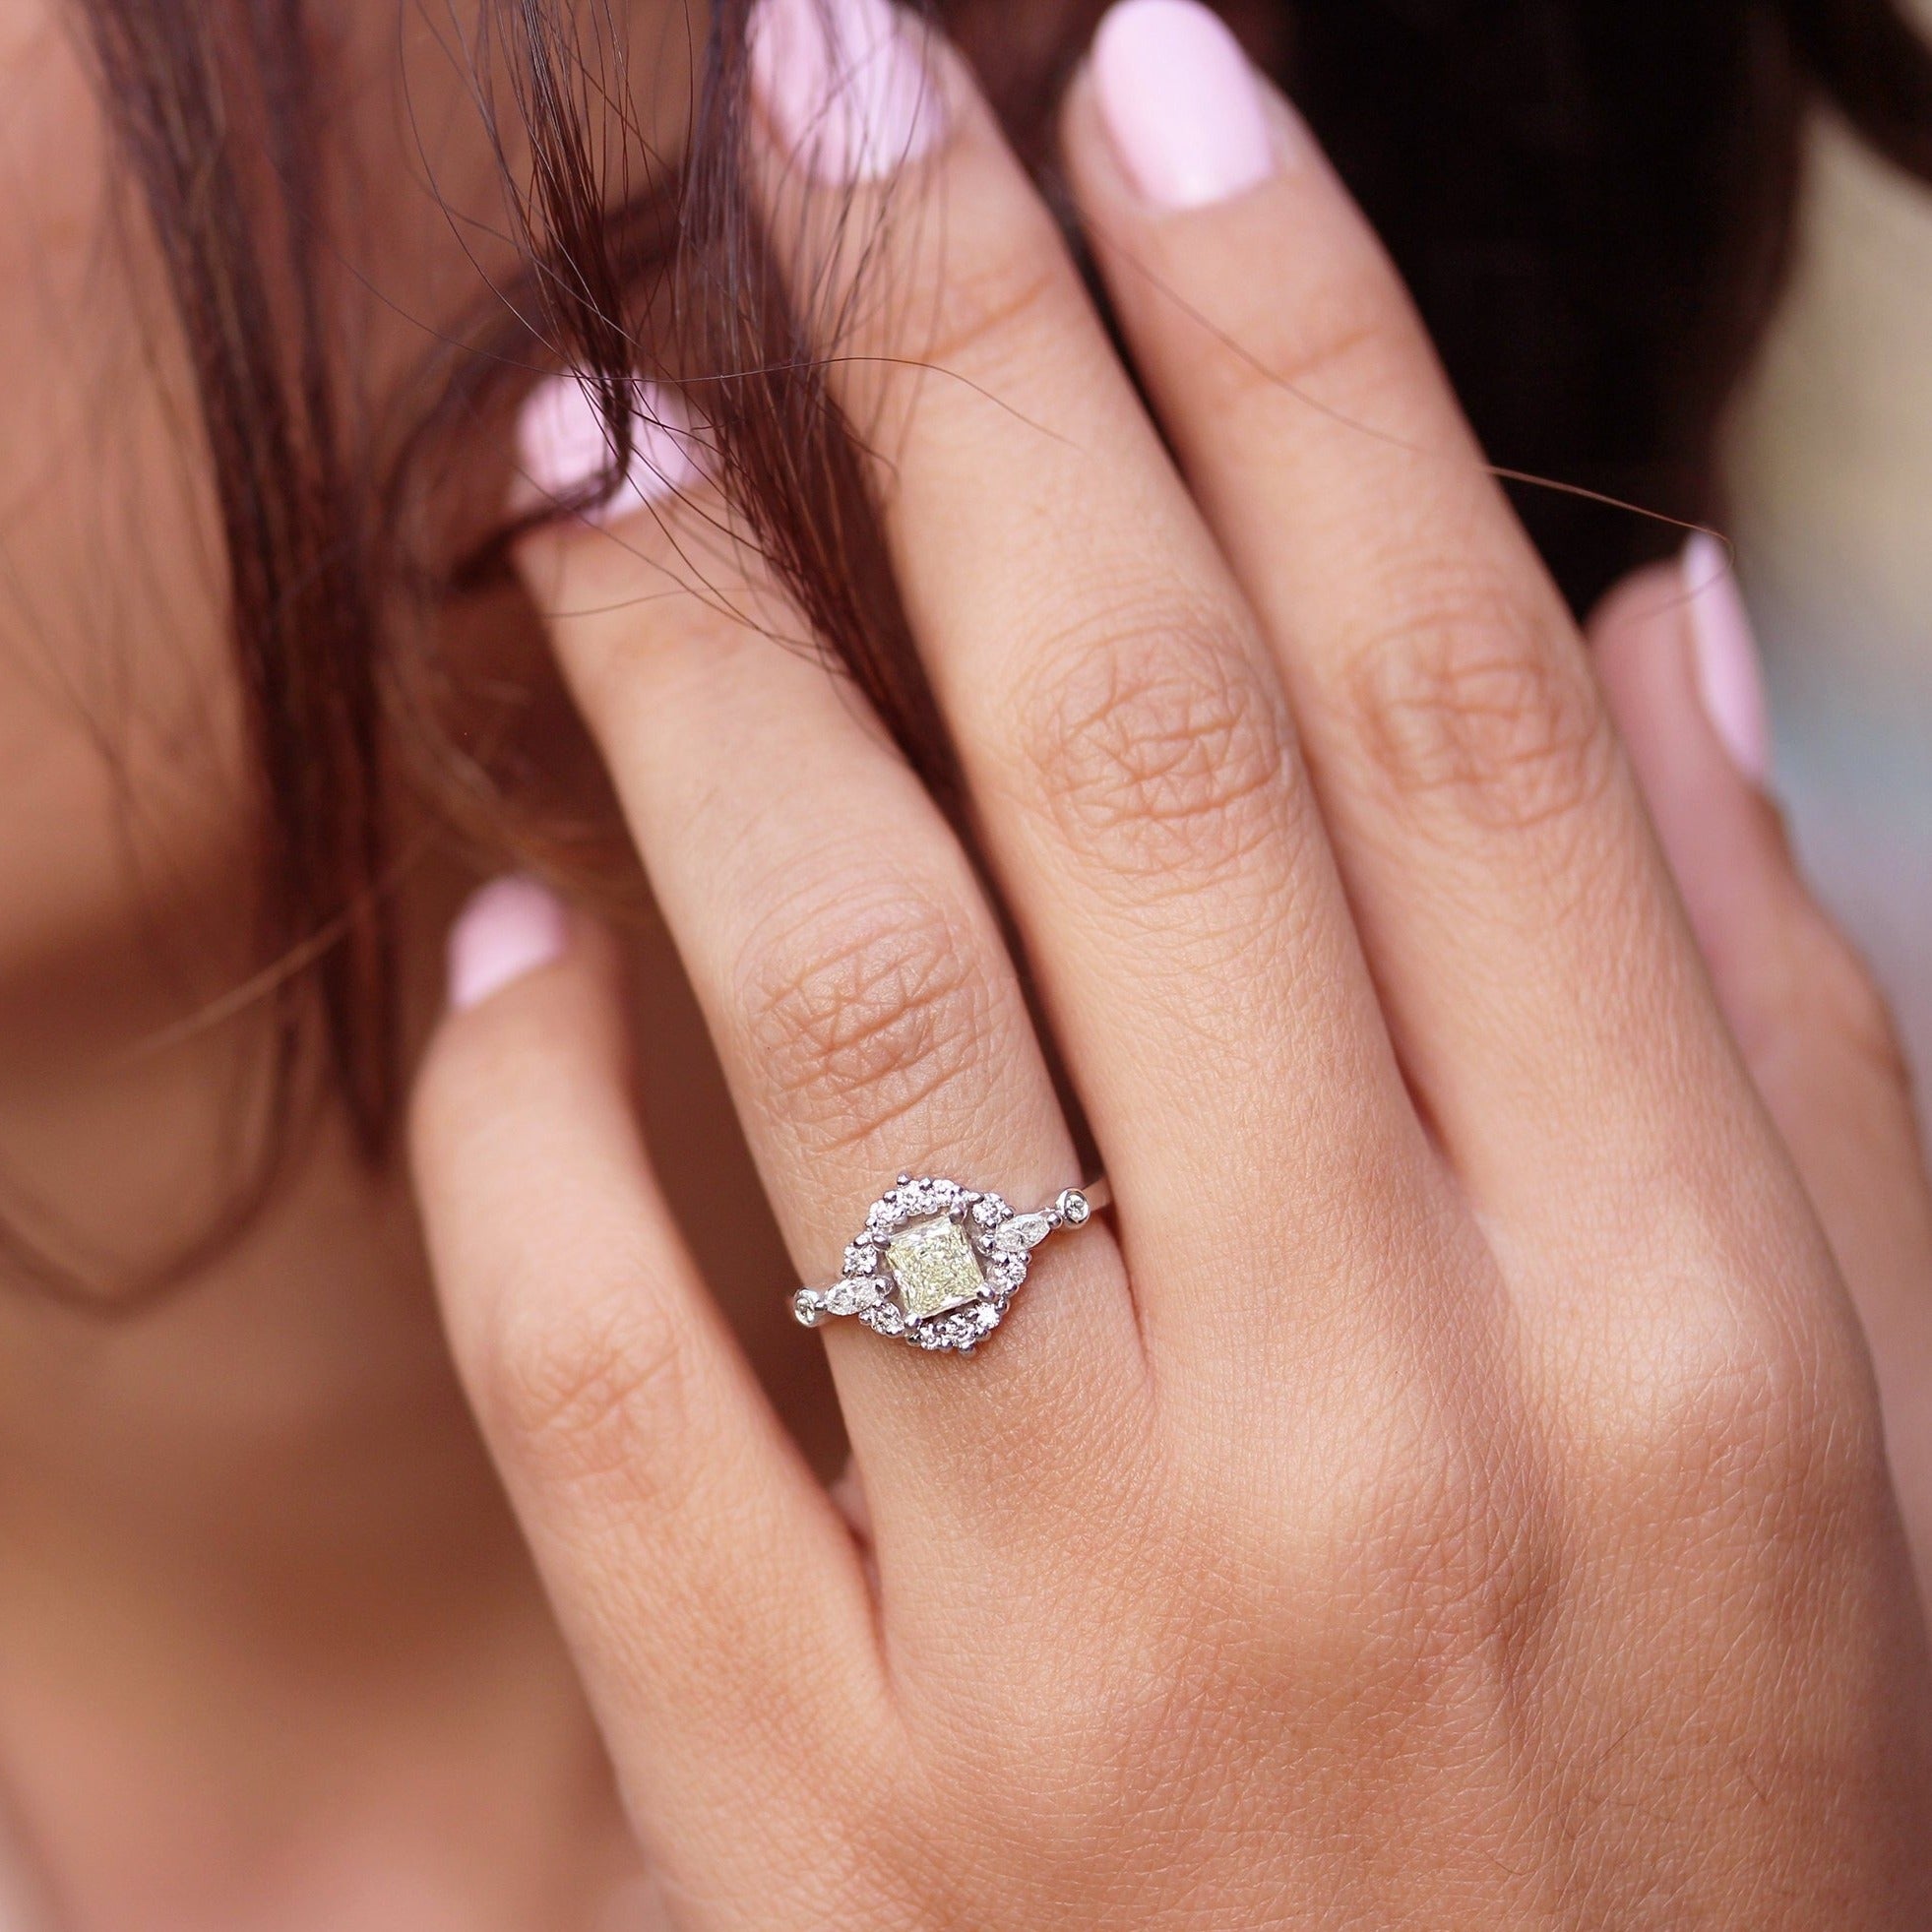 Princess Cut Diamond Engagement Ring, 0.8 carat, 14K White Gold, Ring Size 6.5 - Ready To Ship 'Ecliptic' - sillyshinydiamonds